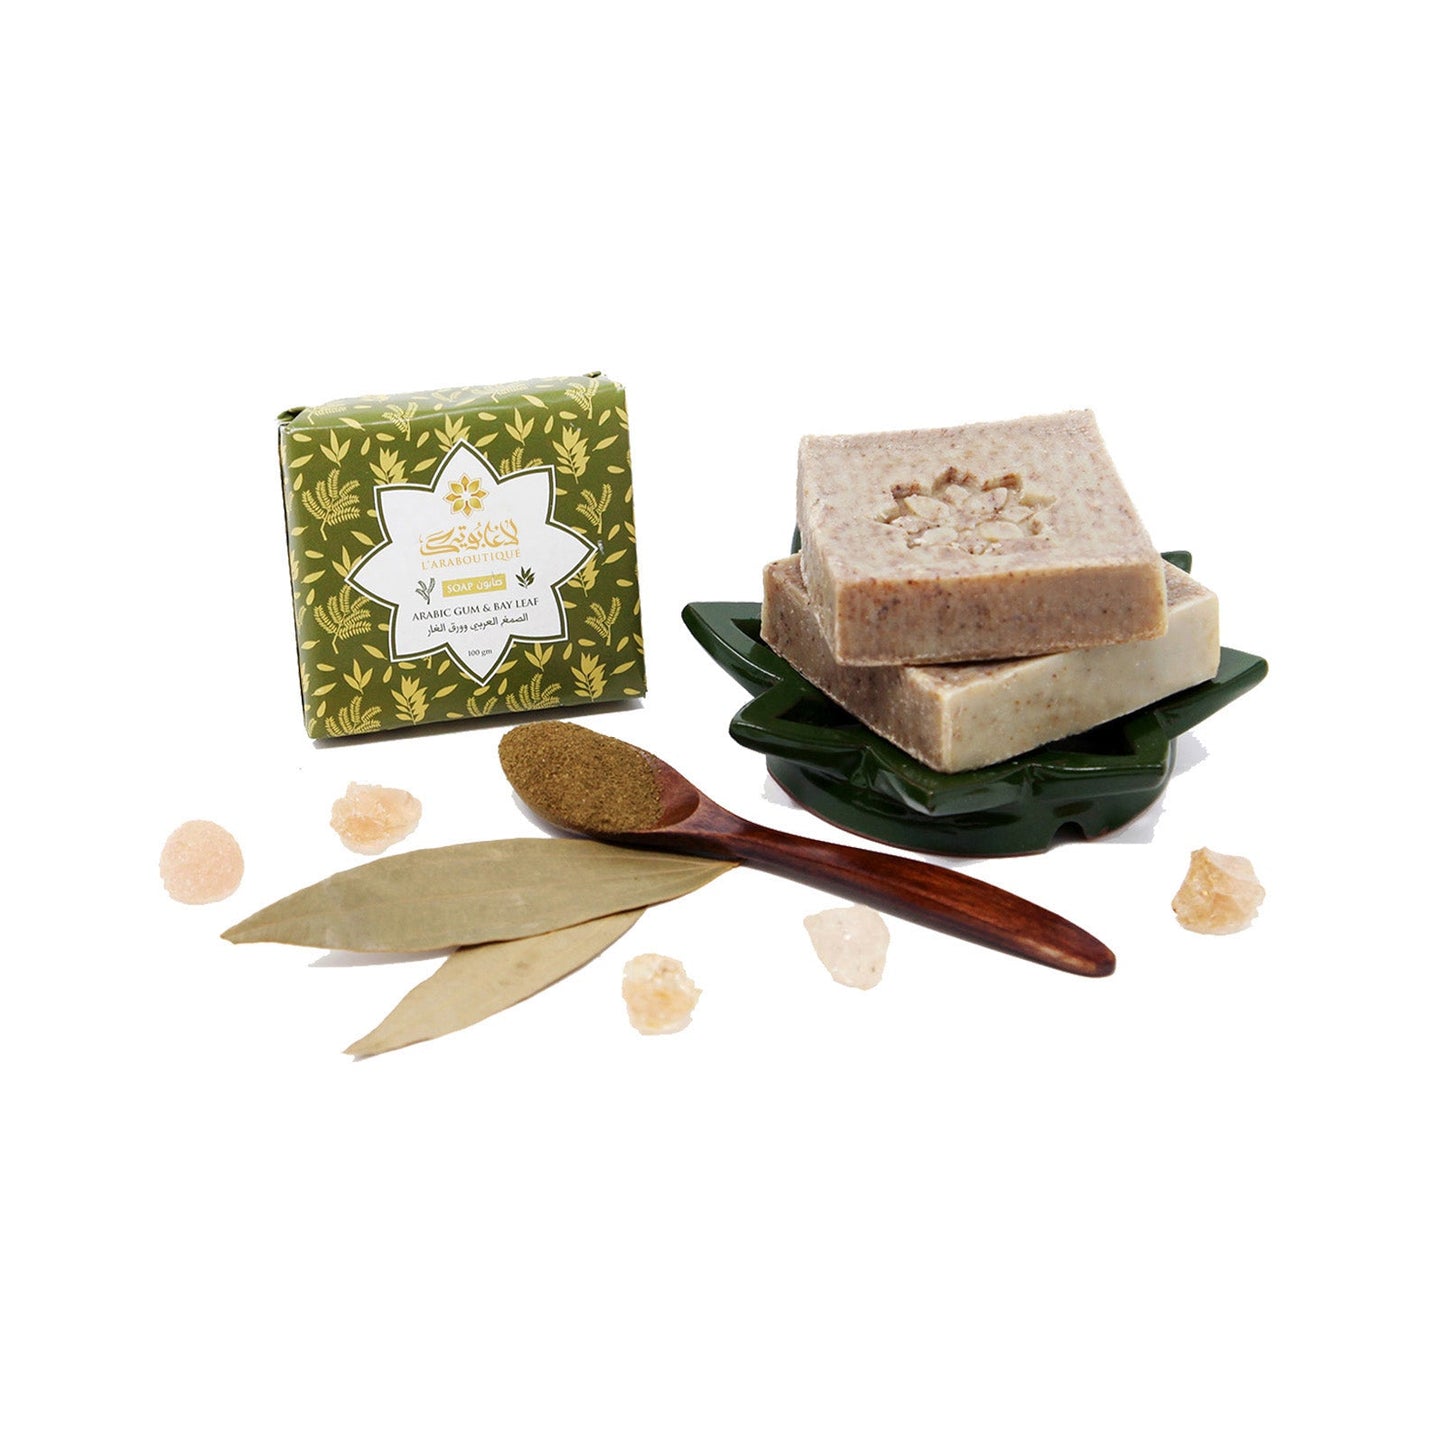 Arabic Gum and Bay Leaf Soap - 100g